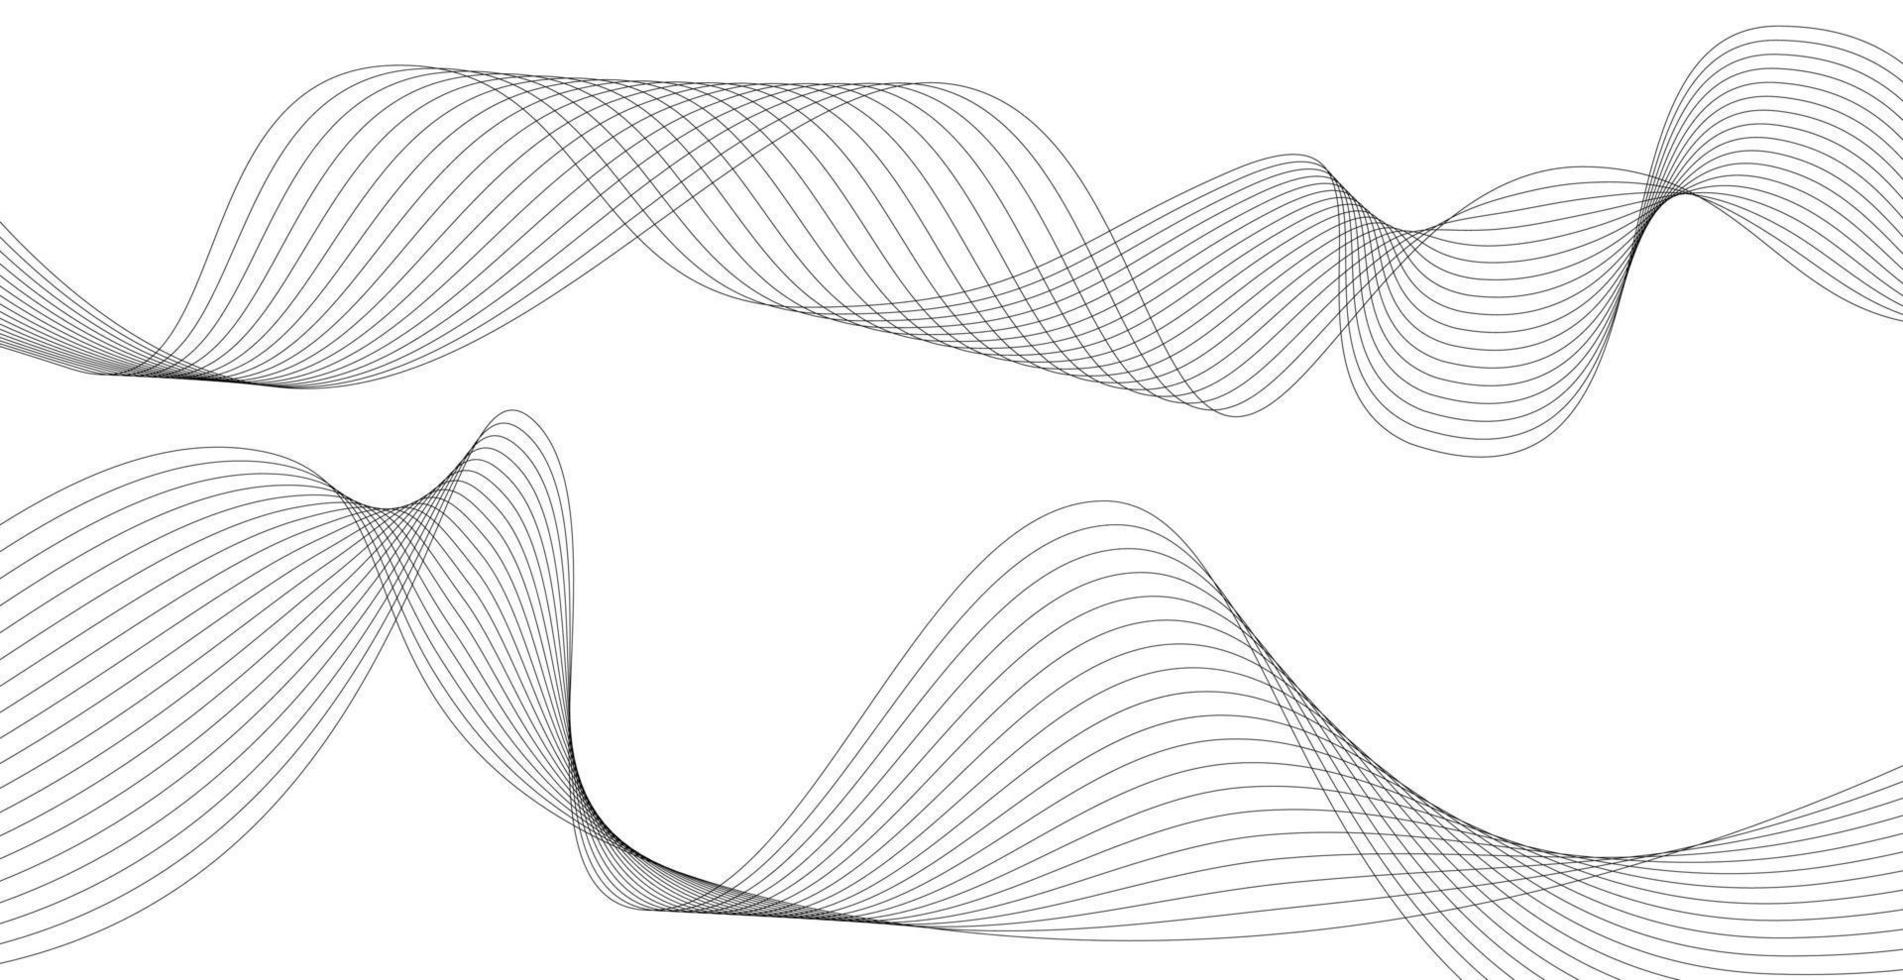 Wave line background vector